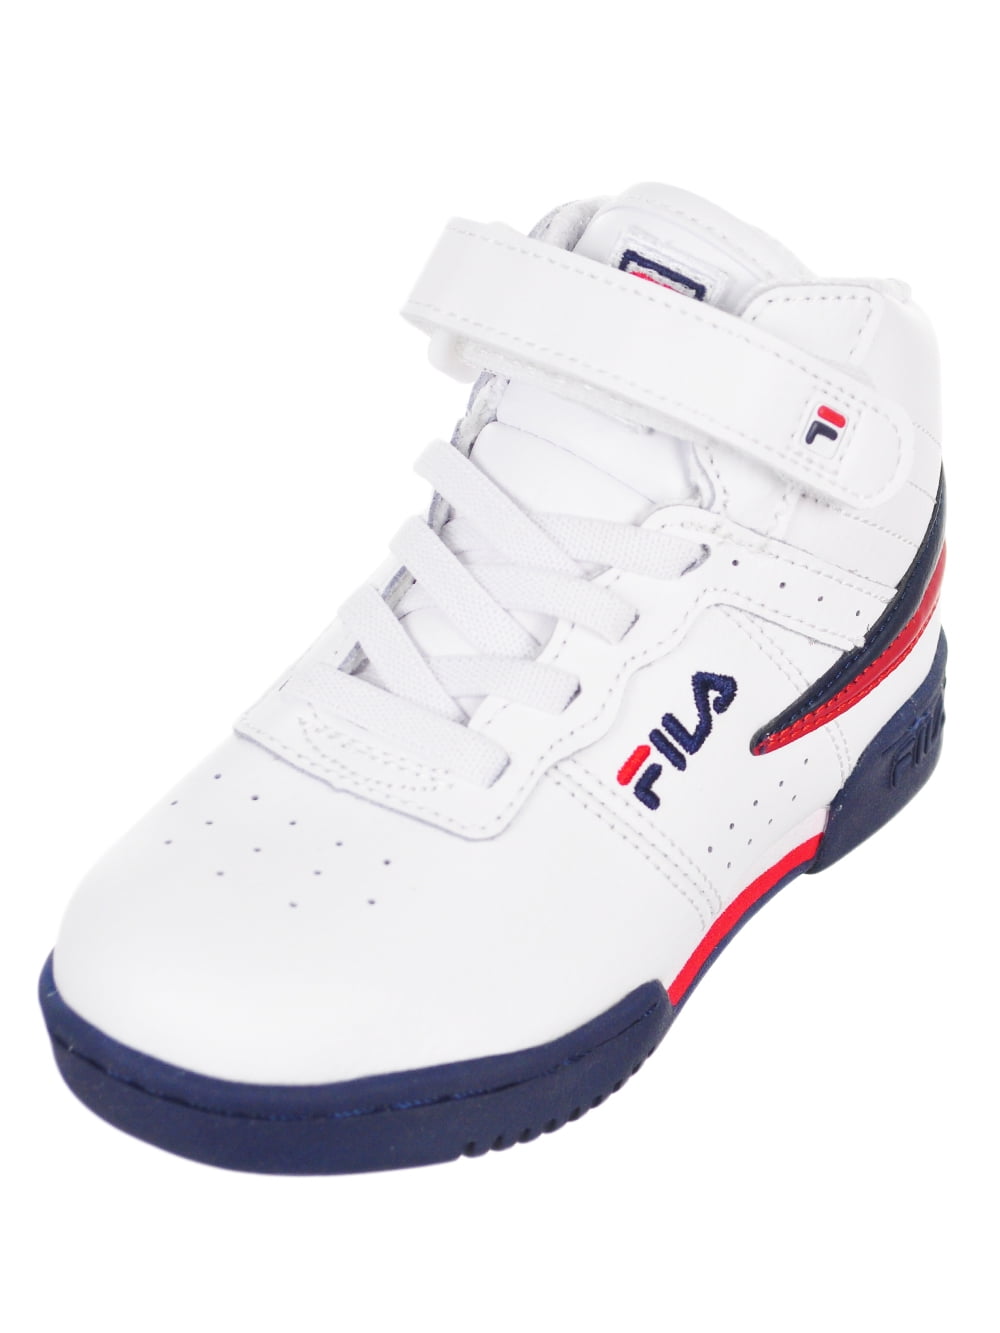 FILA - Fila Boys' F-13 Hi-Top Sneakers (Sizes 6 - 10) - white/navy/red ...